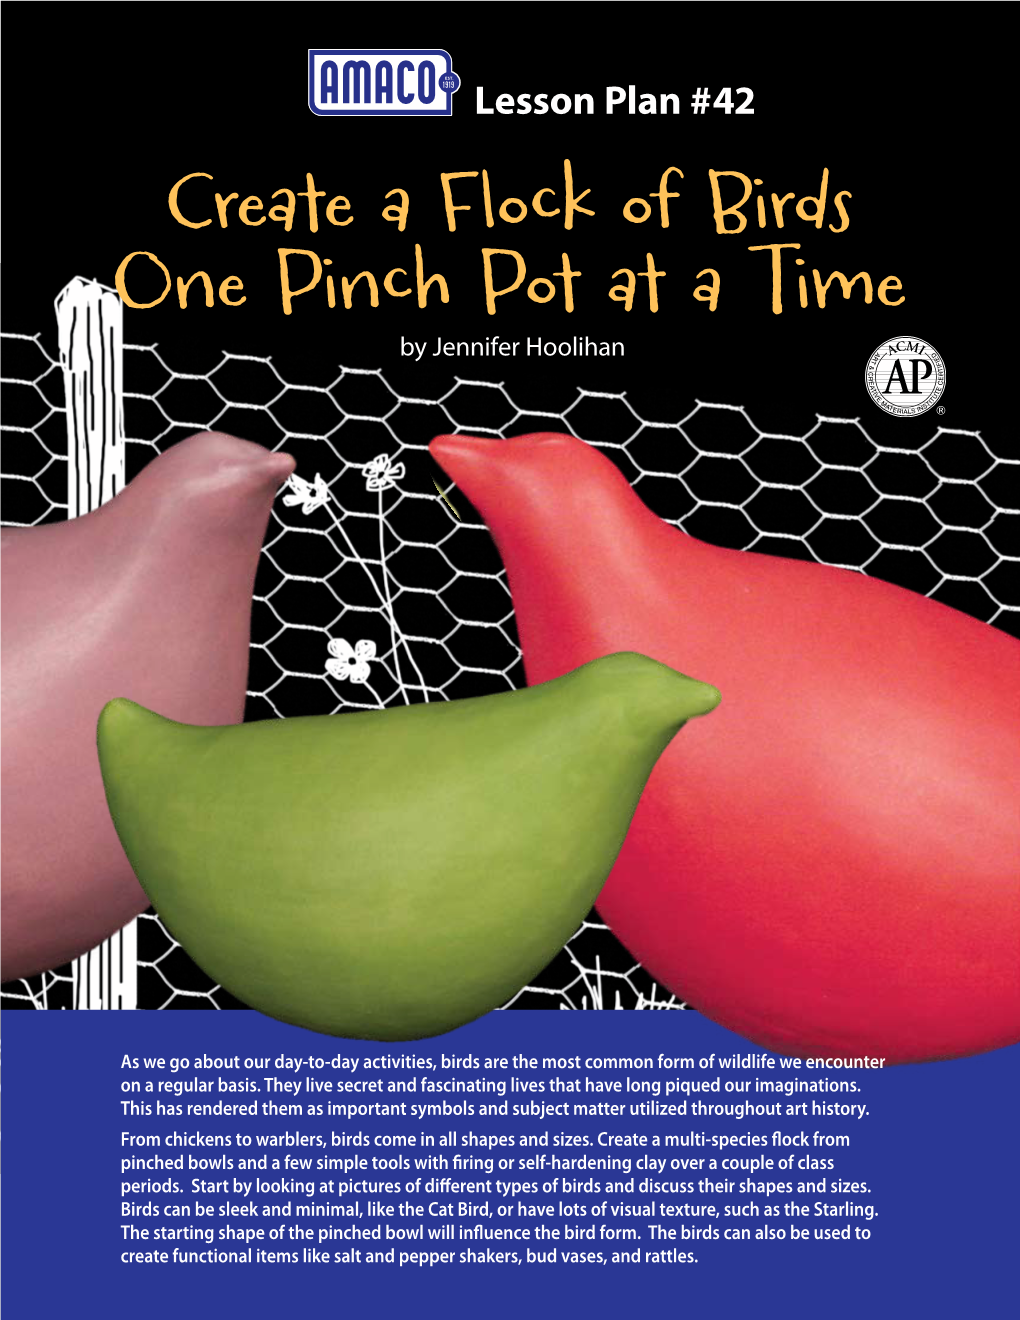 Create a Flock of Birds One Pinch Pot at a Time by Jennifer Hoolihan